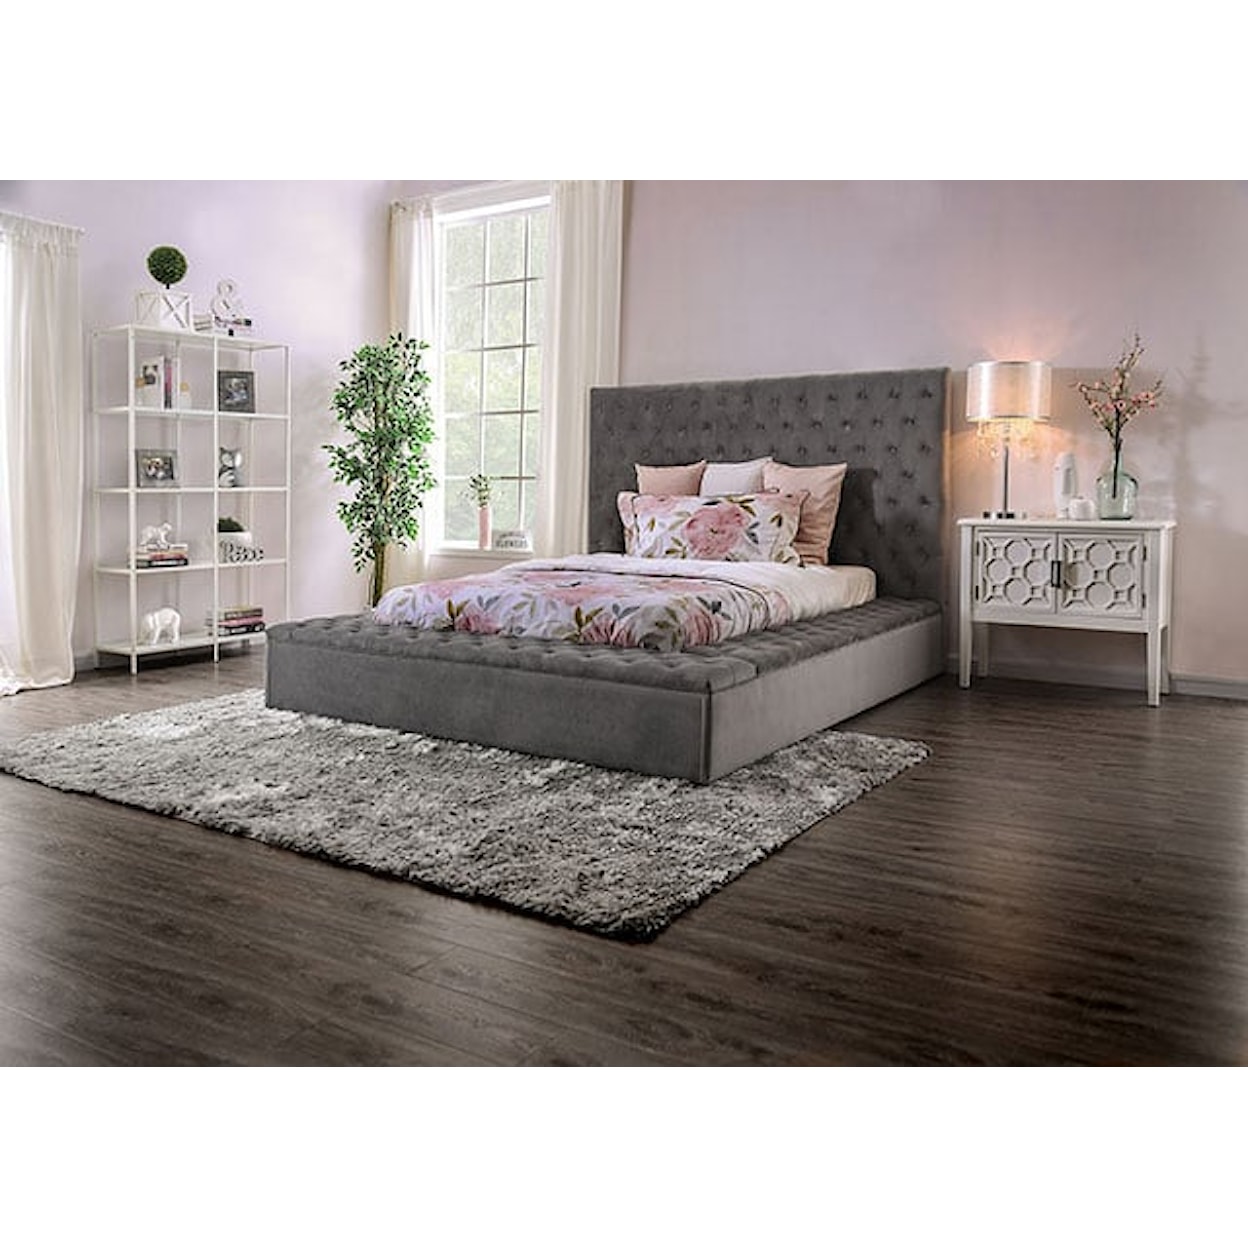 Furniture of America Golati Upholstered California King Platform Bed